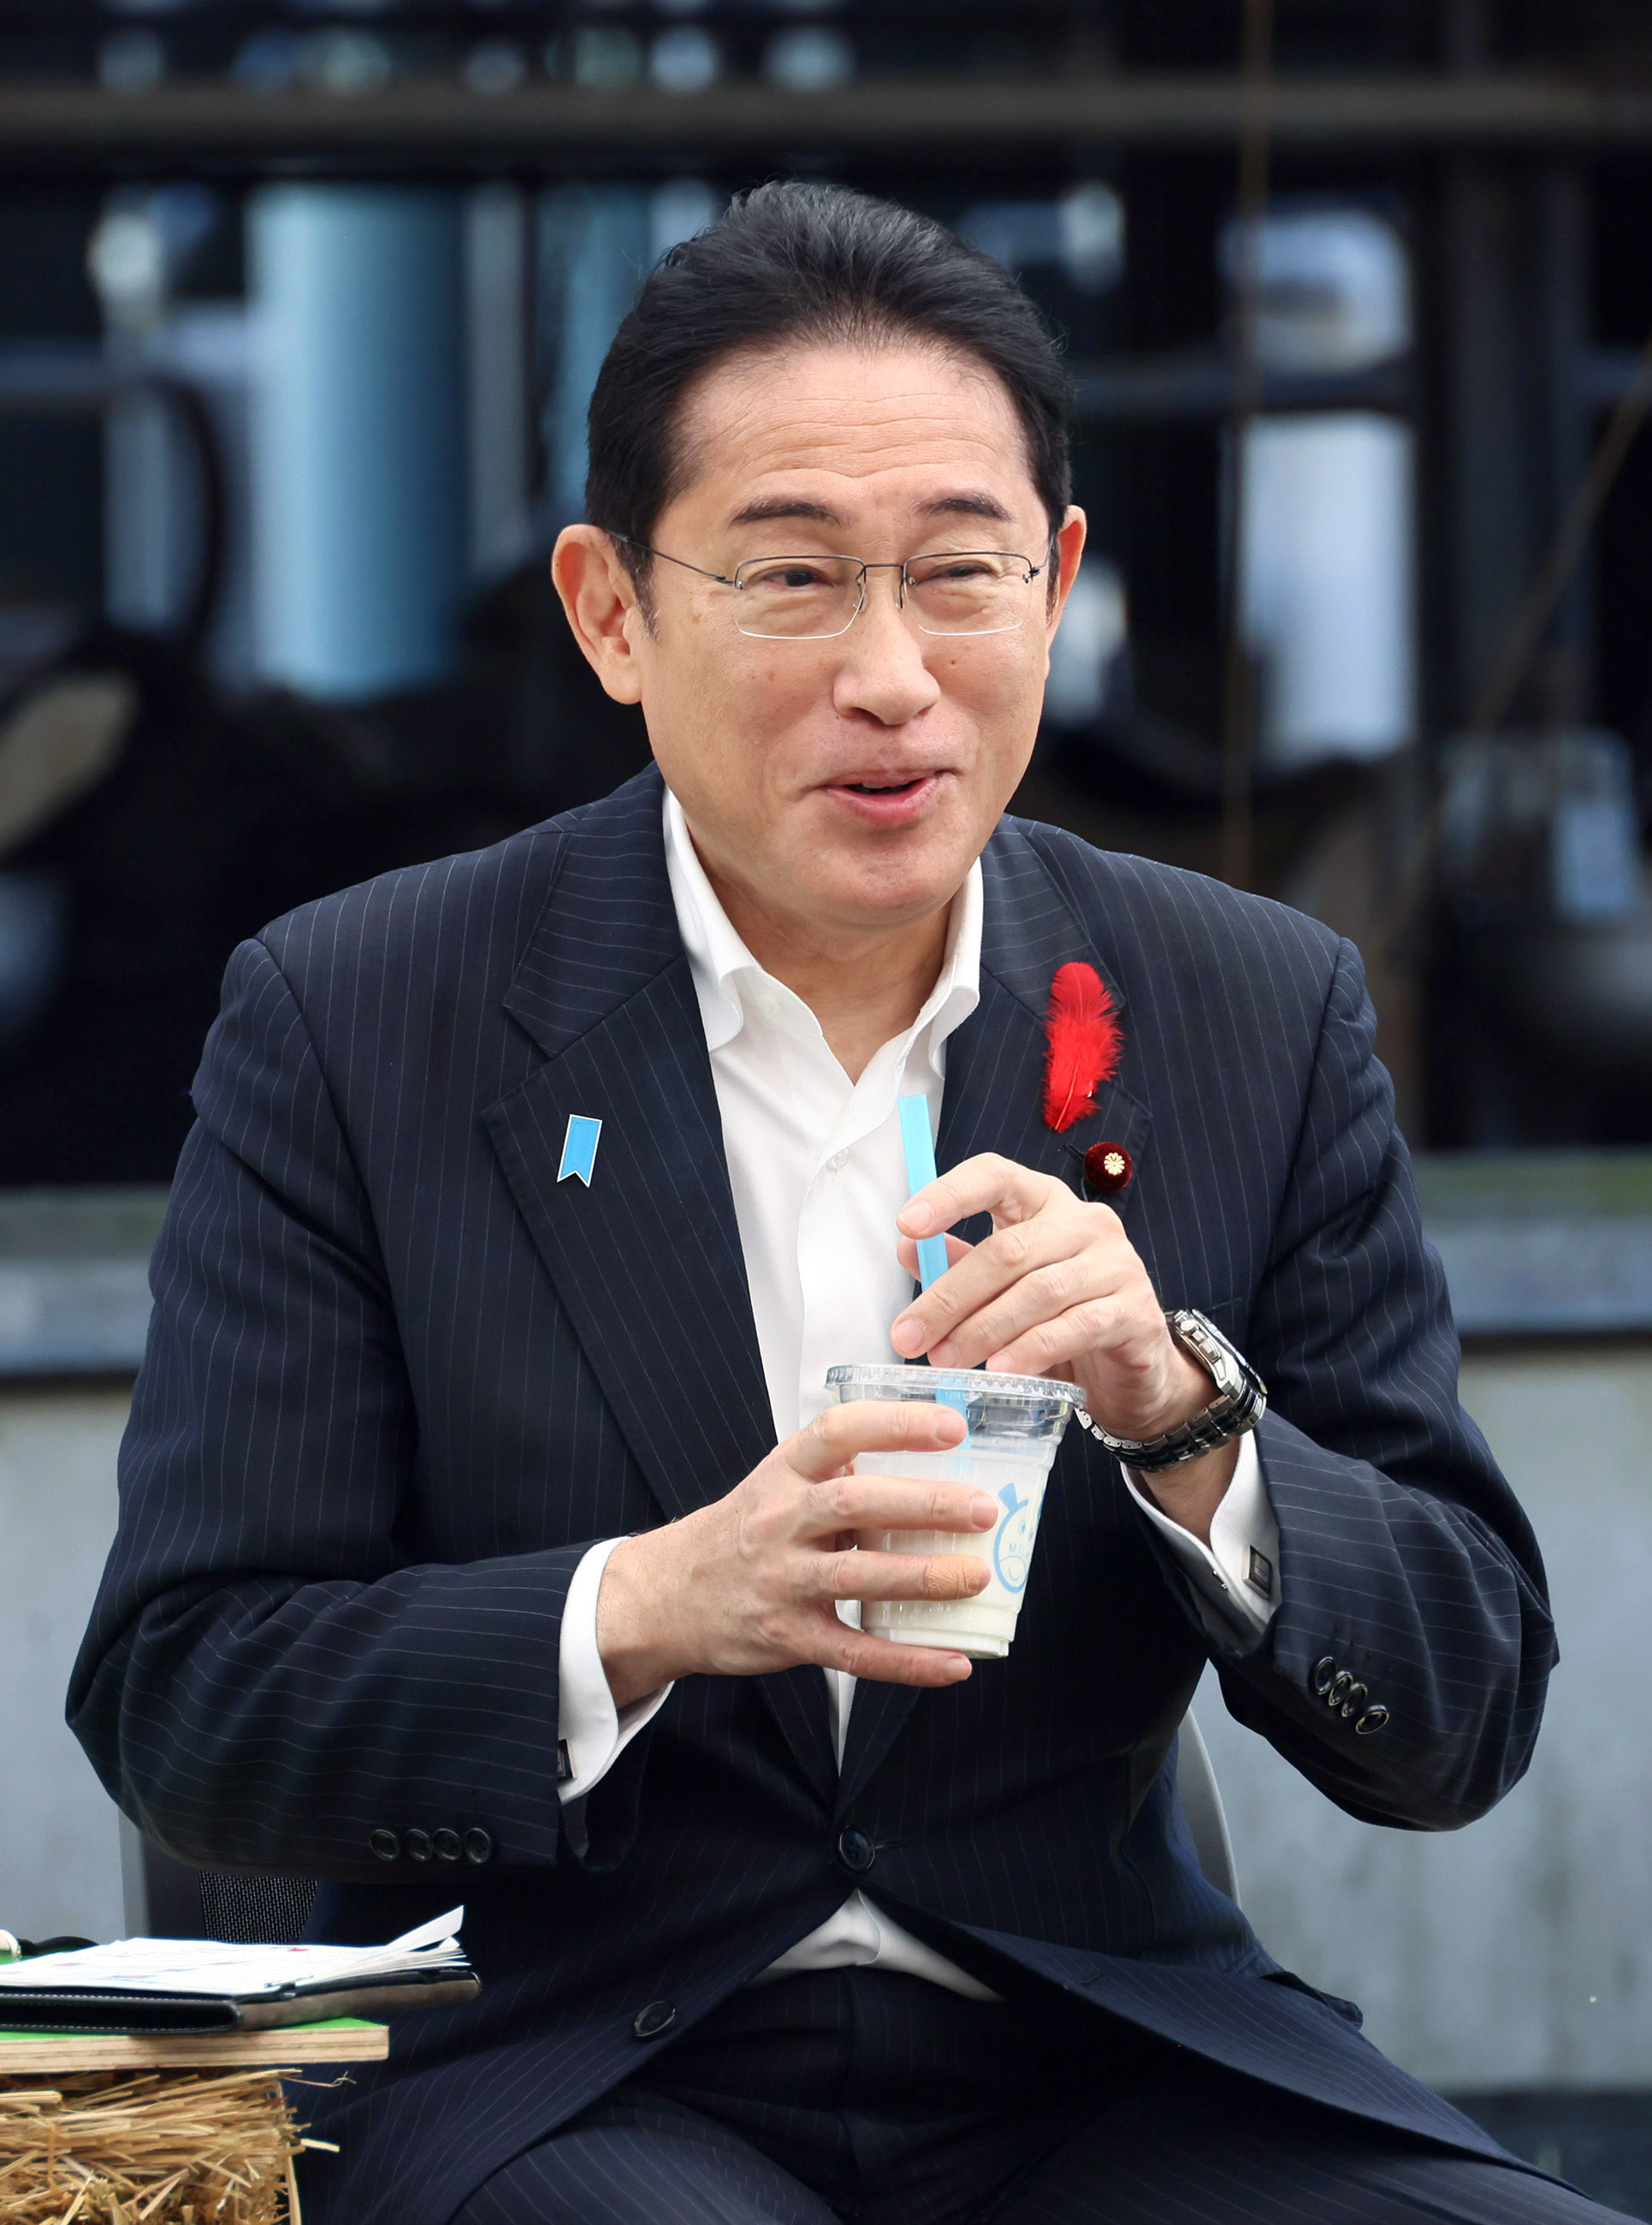 Prime Minister Kishida tasting a cup of milk